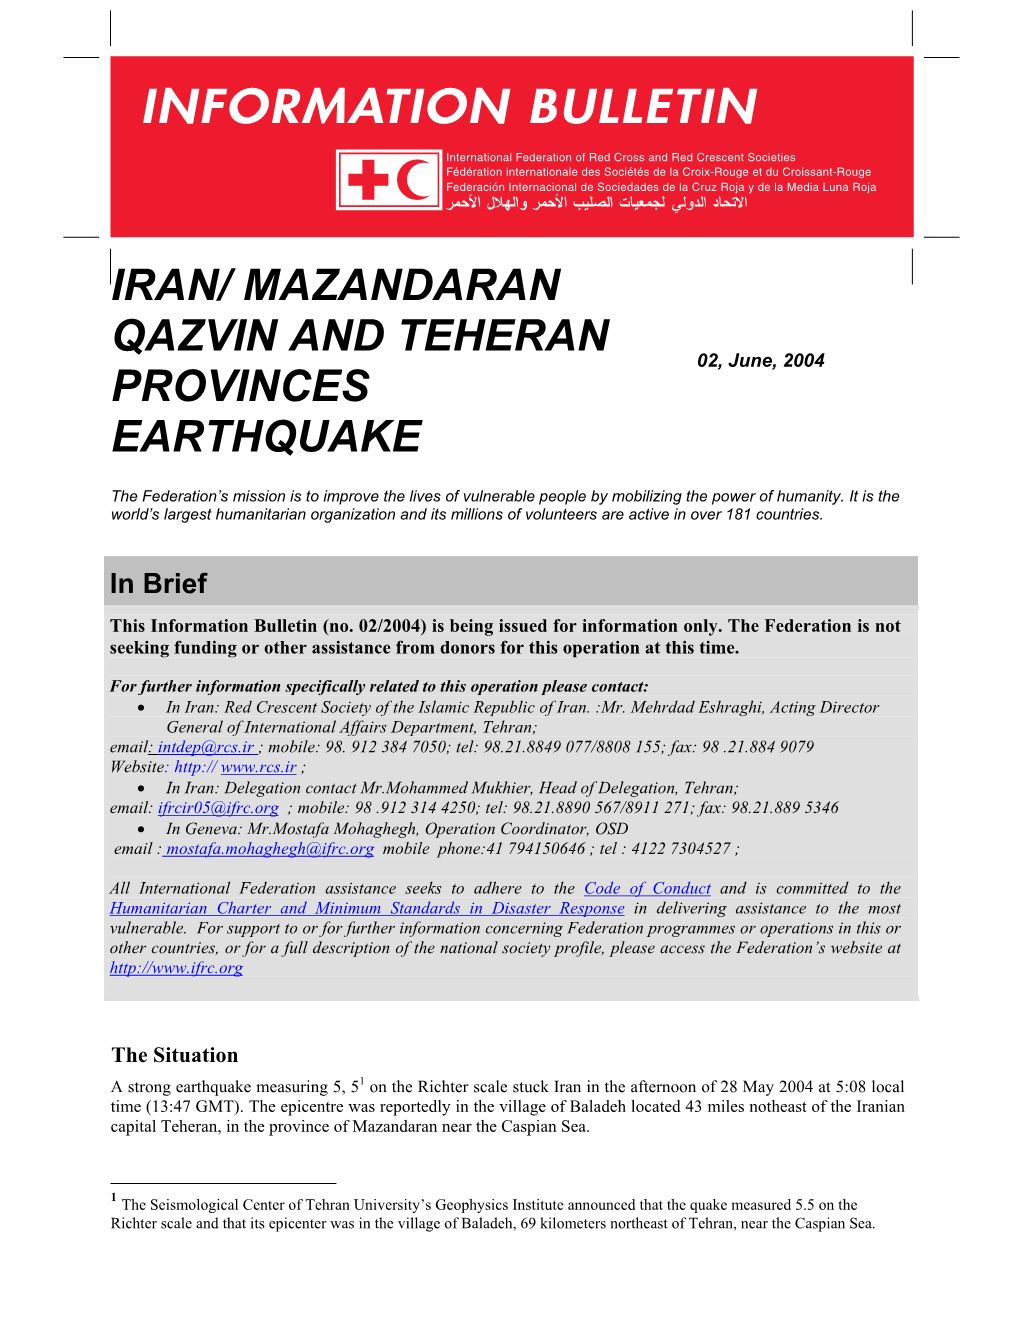 Iran/ Mazandaran Qazvin and Teheran Provinces